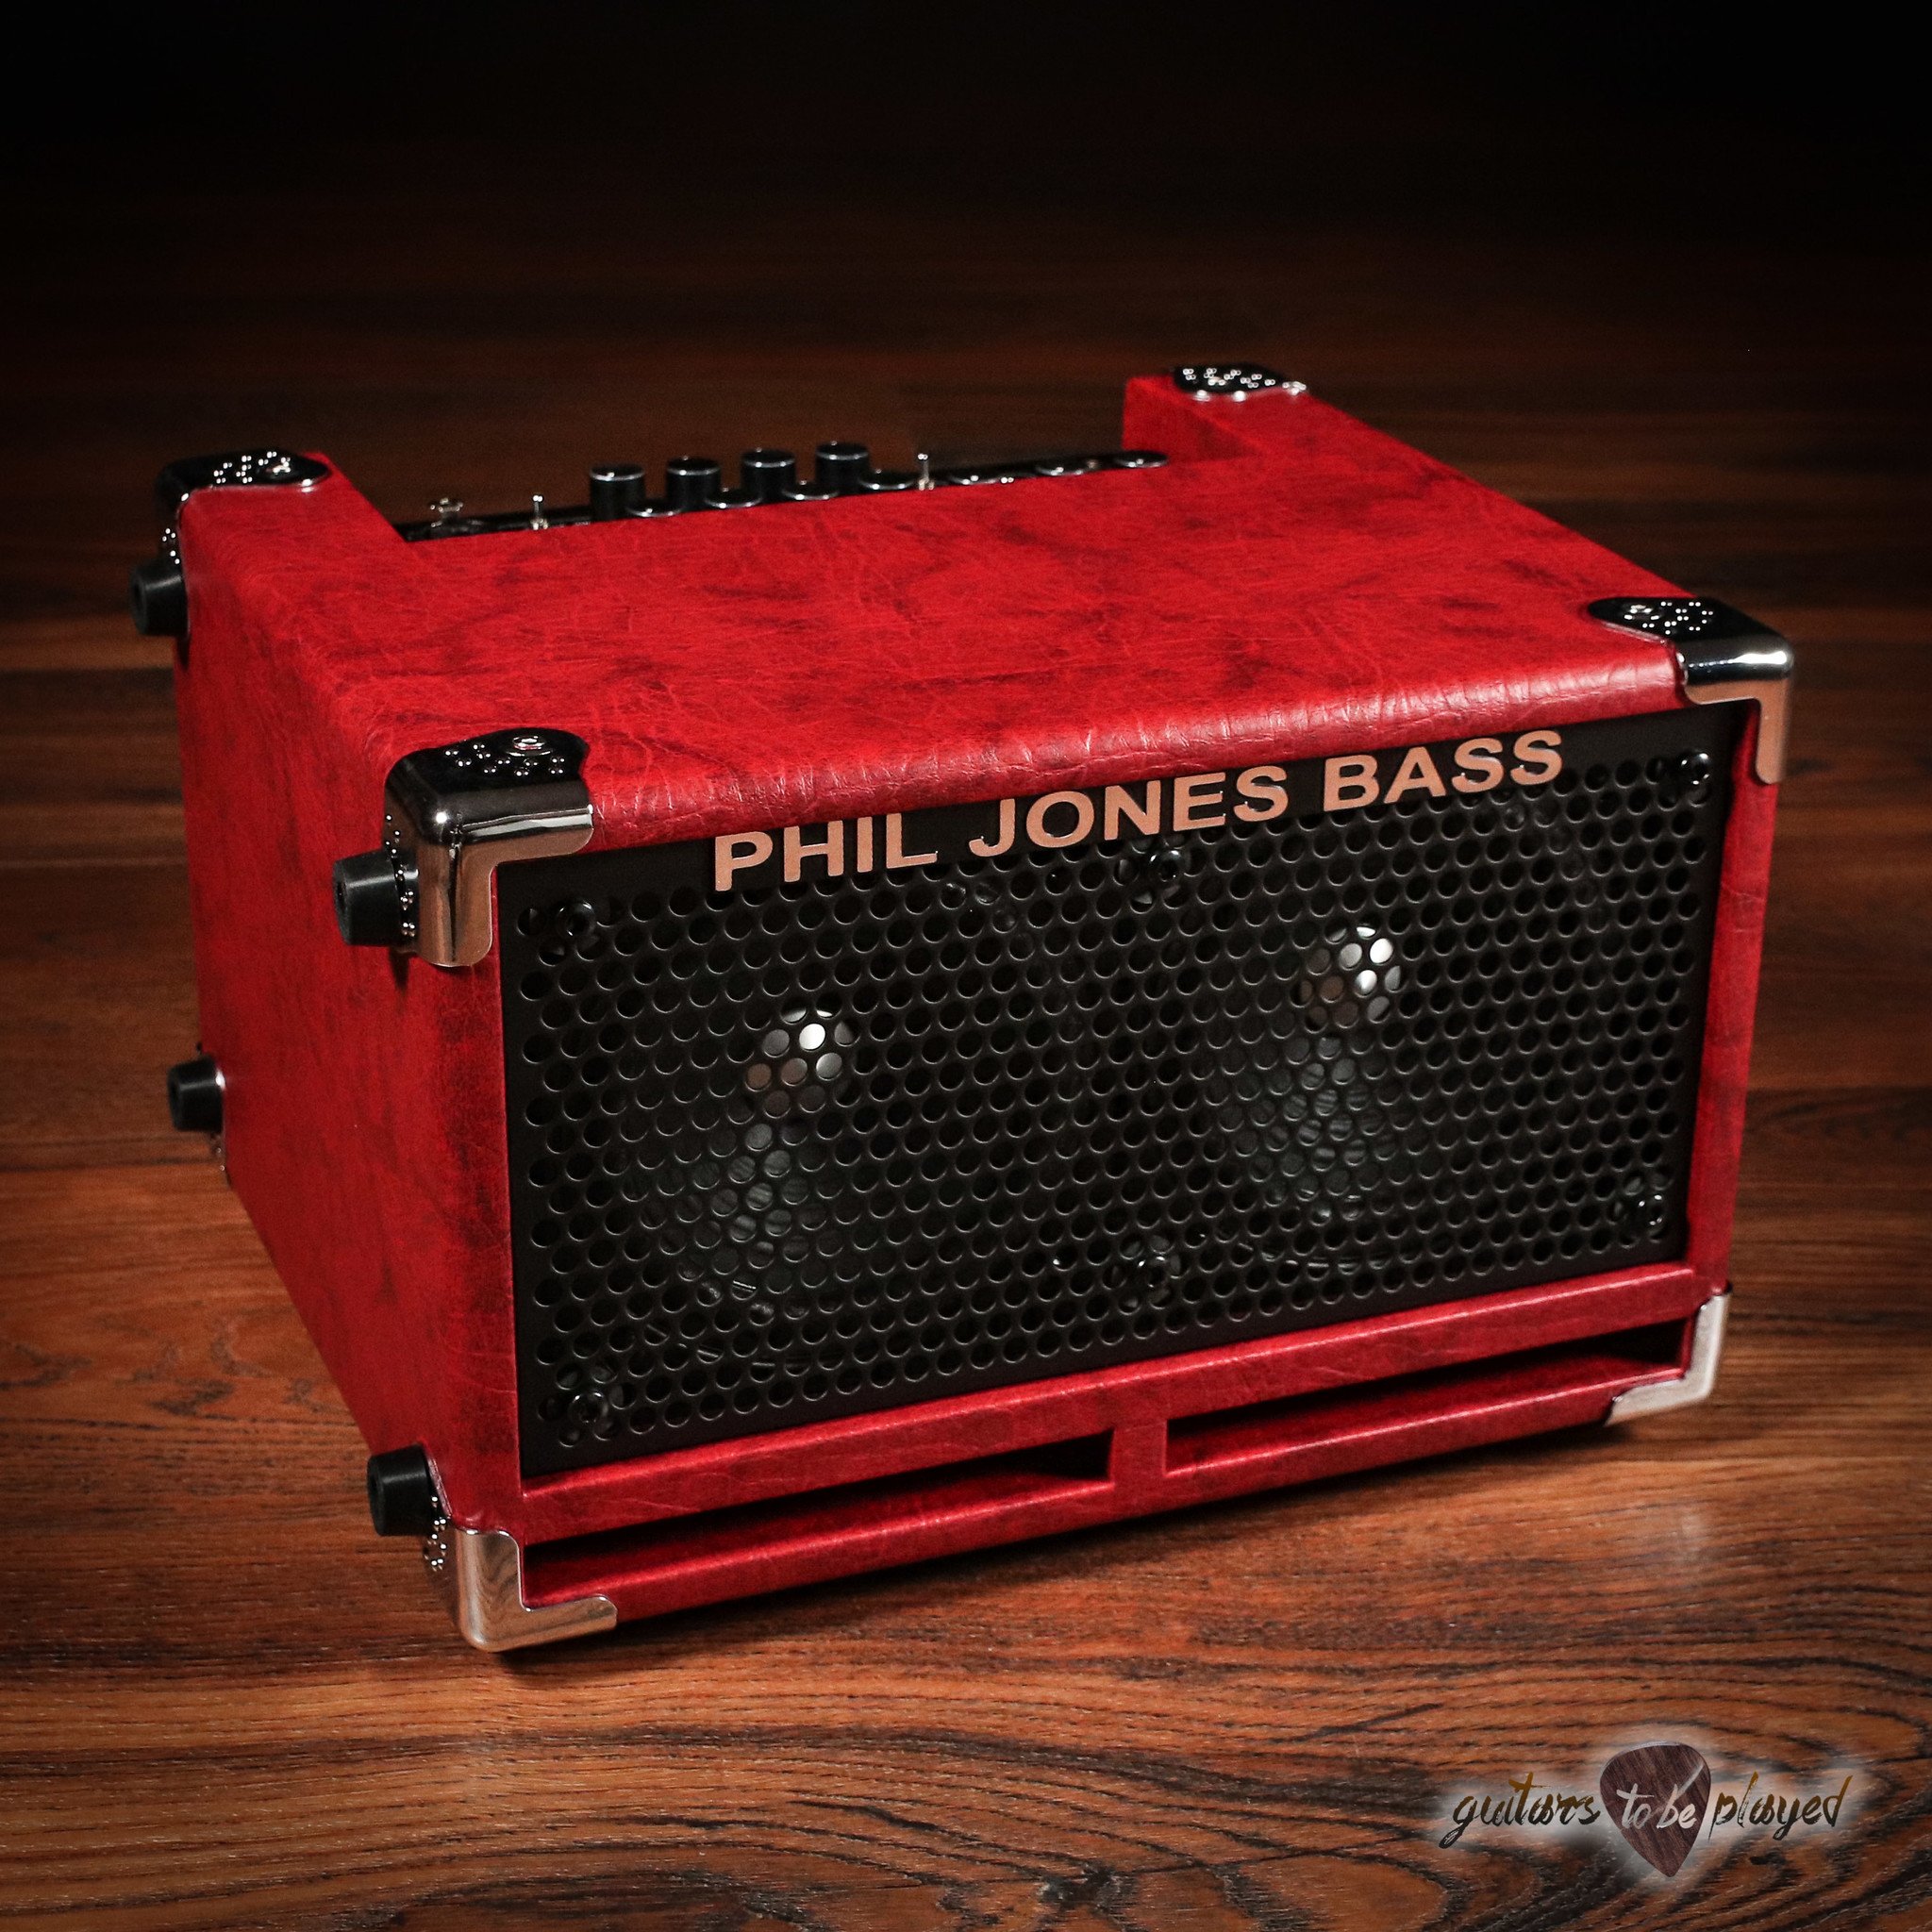 Phil Jones Bass BG-110 Bass Cub II 2x5” 110W Combo Amp w/ Cover - Red